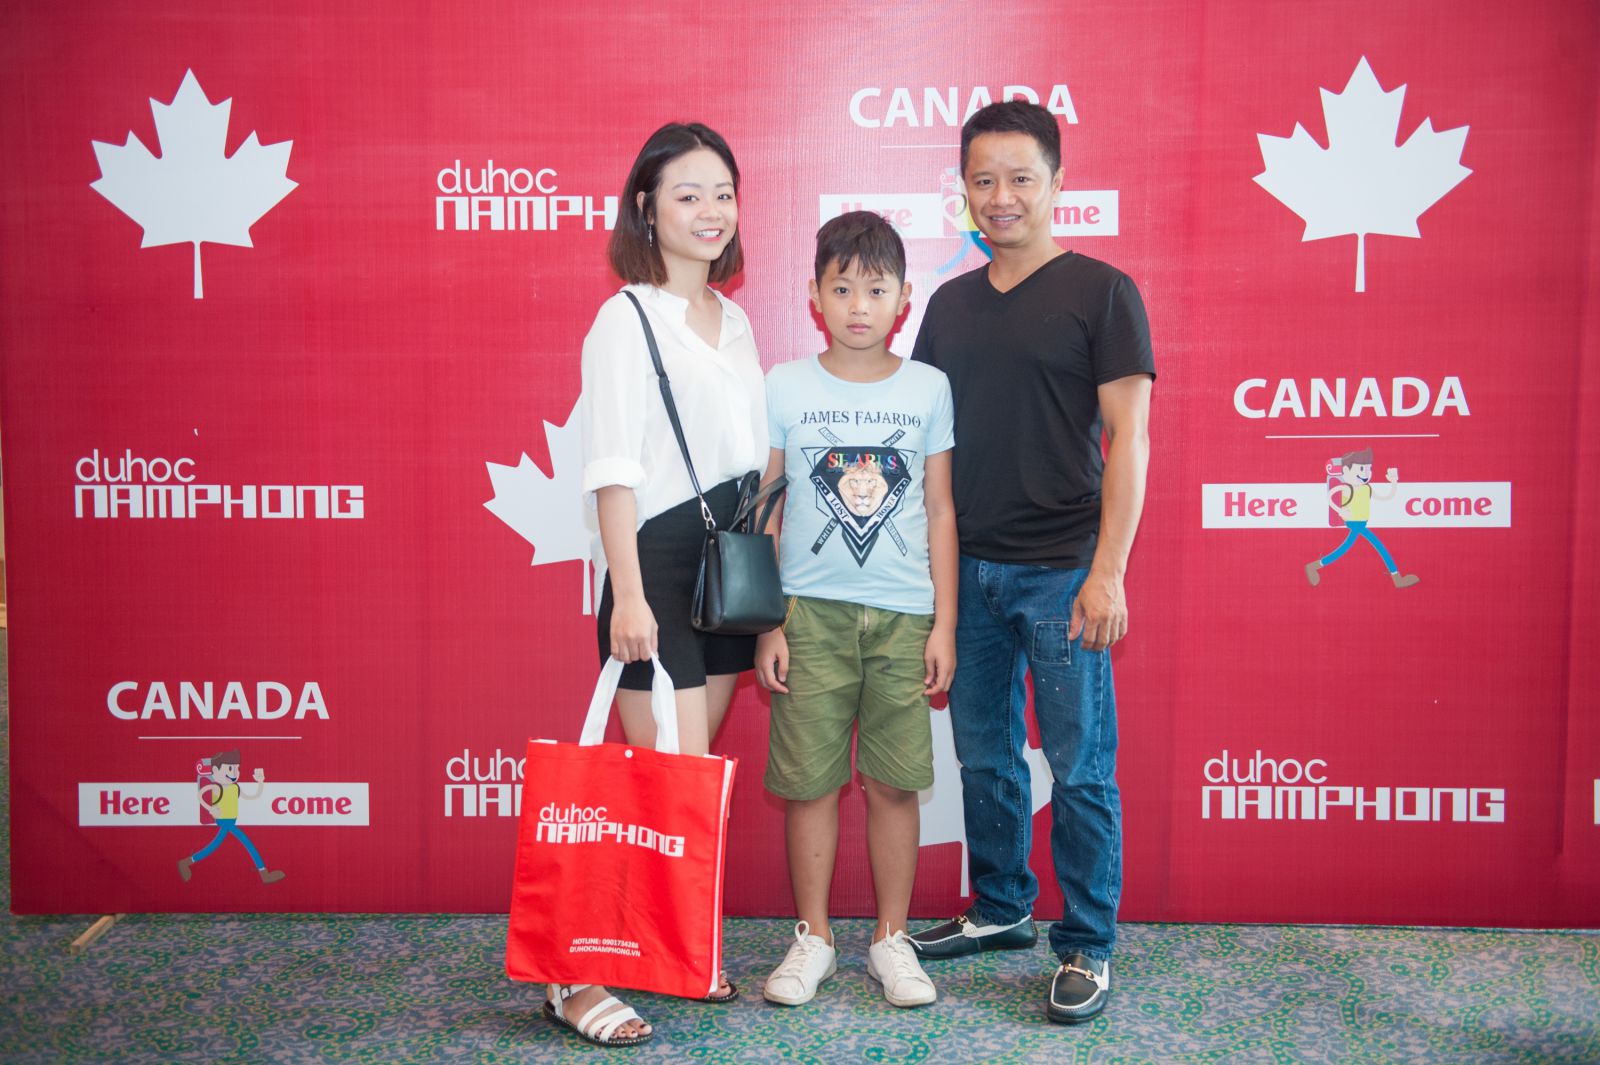 Canada Here I Come 2017 - Chuan bi hanh trang du hoc - Hoc sinh Hoai Thu